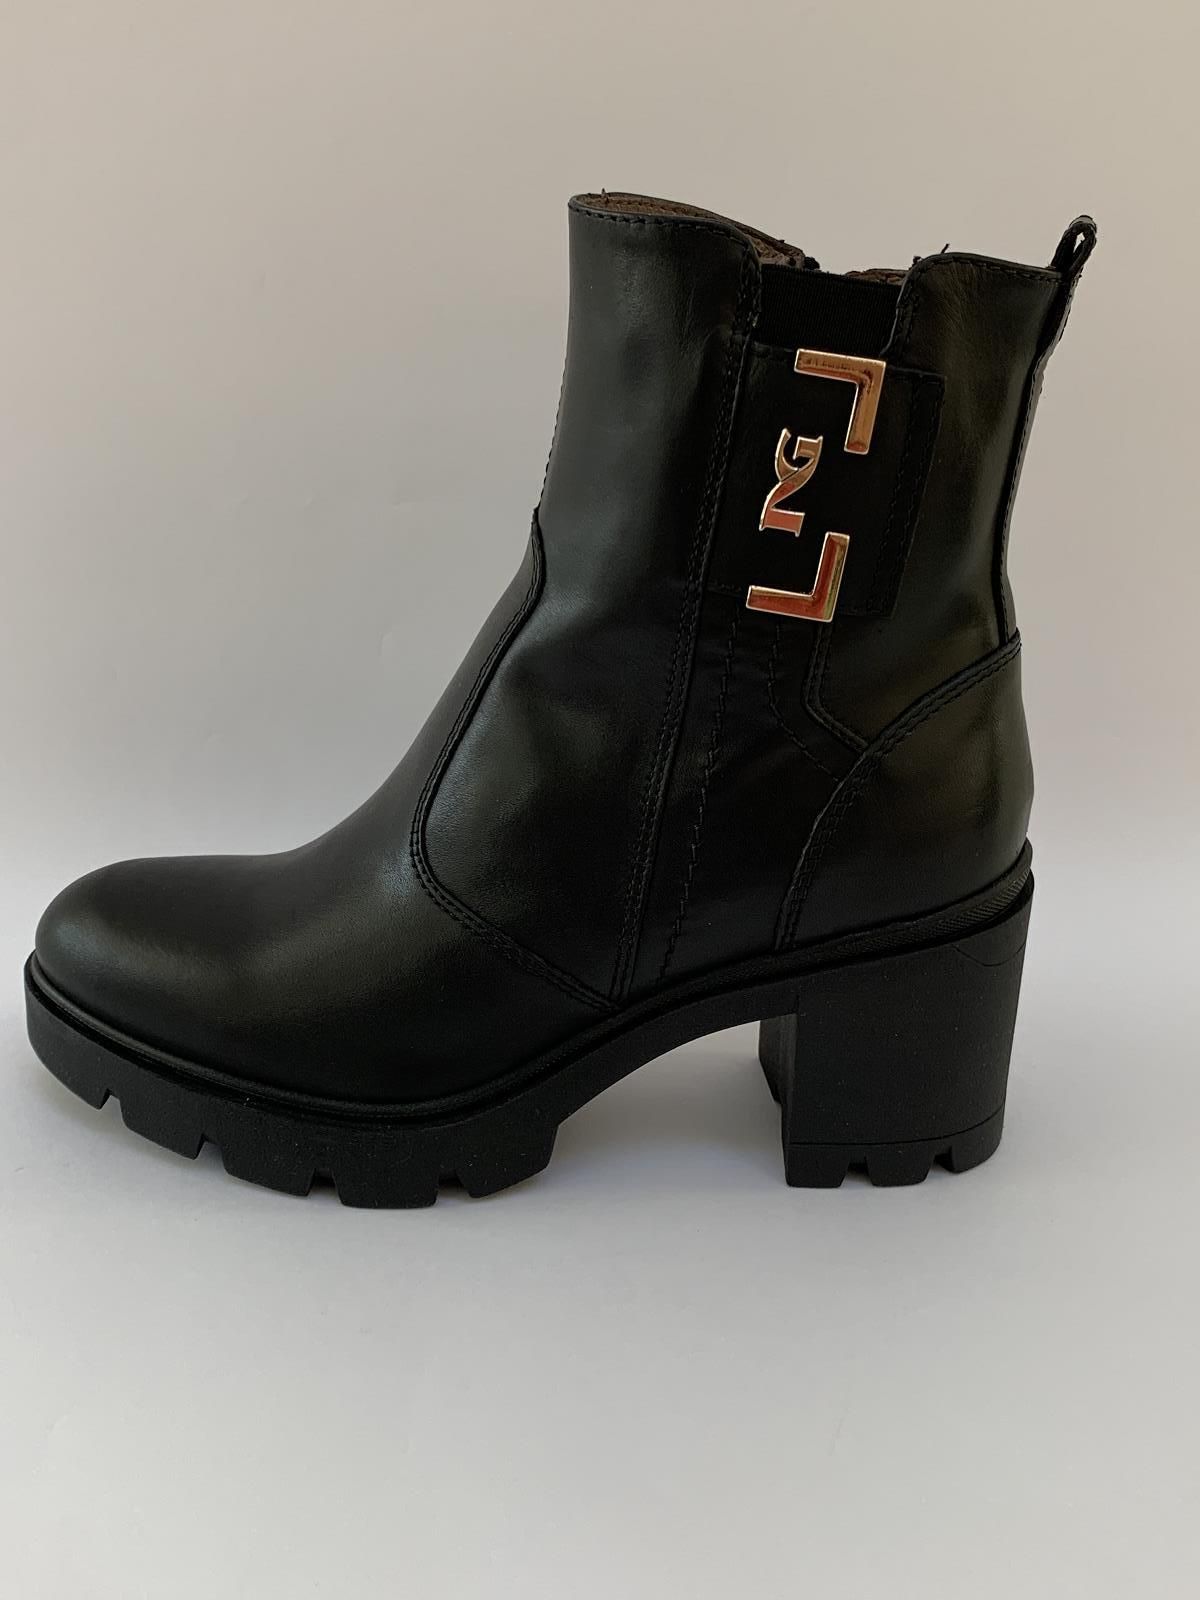 Nero Giardini Boots Zwart dames (Booty Broche Hyper - 205860) - Schoenen Luca